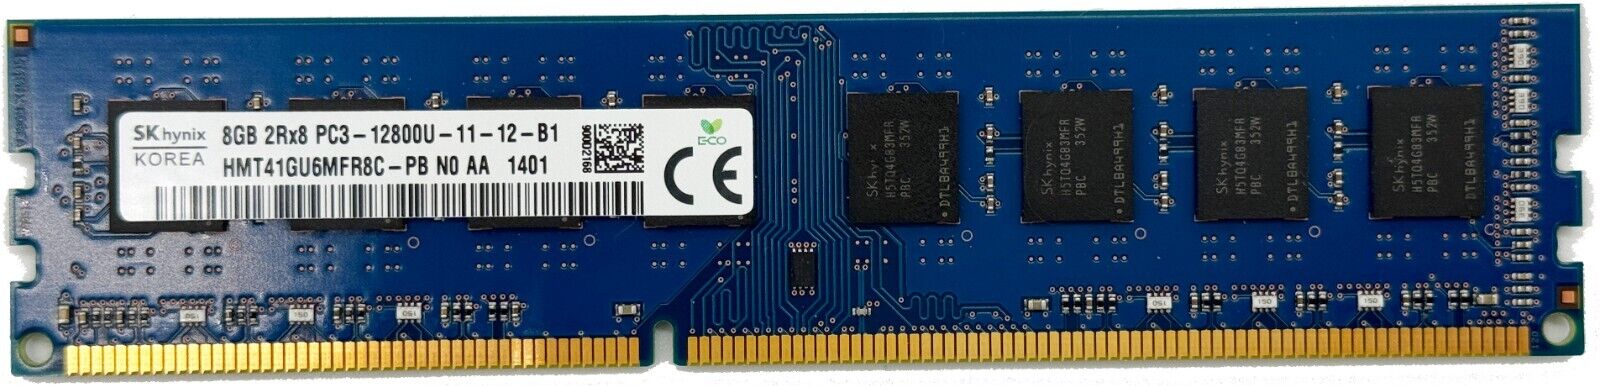 SK Hynix 8GB DDR3-1600 240-pin DIMM 1600MHz DDR3 RAM Memory HMT41GU6MFR8C-PB